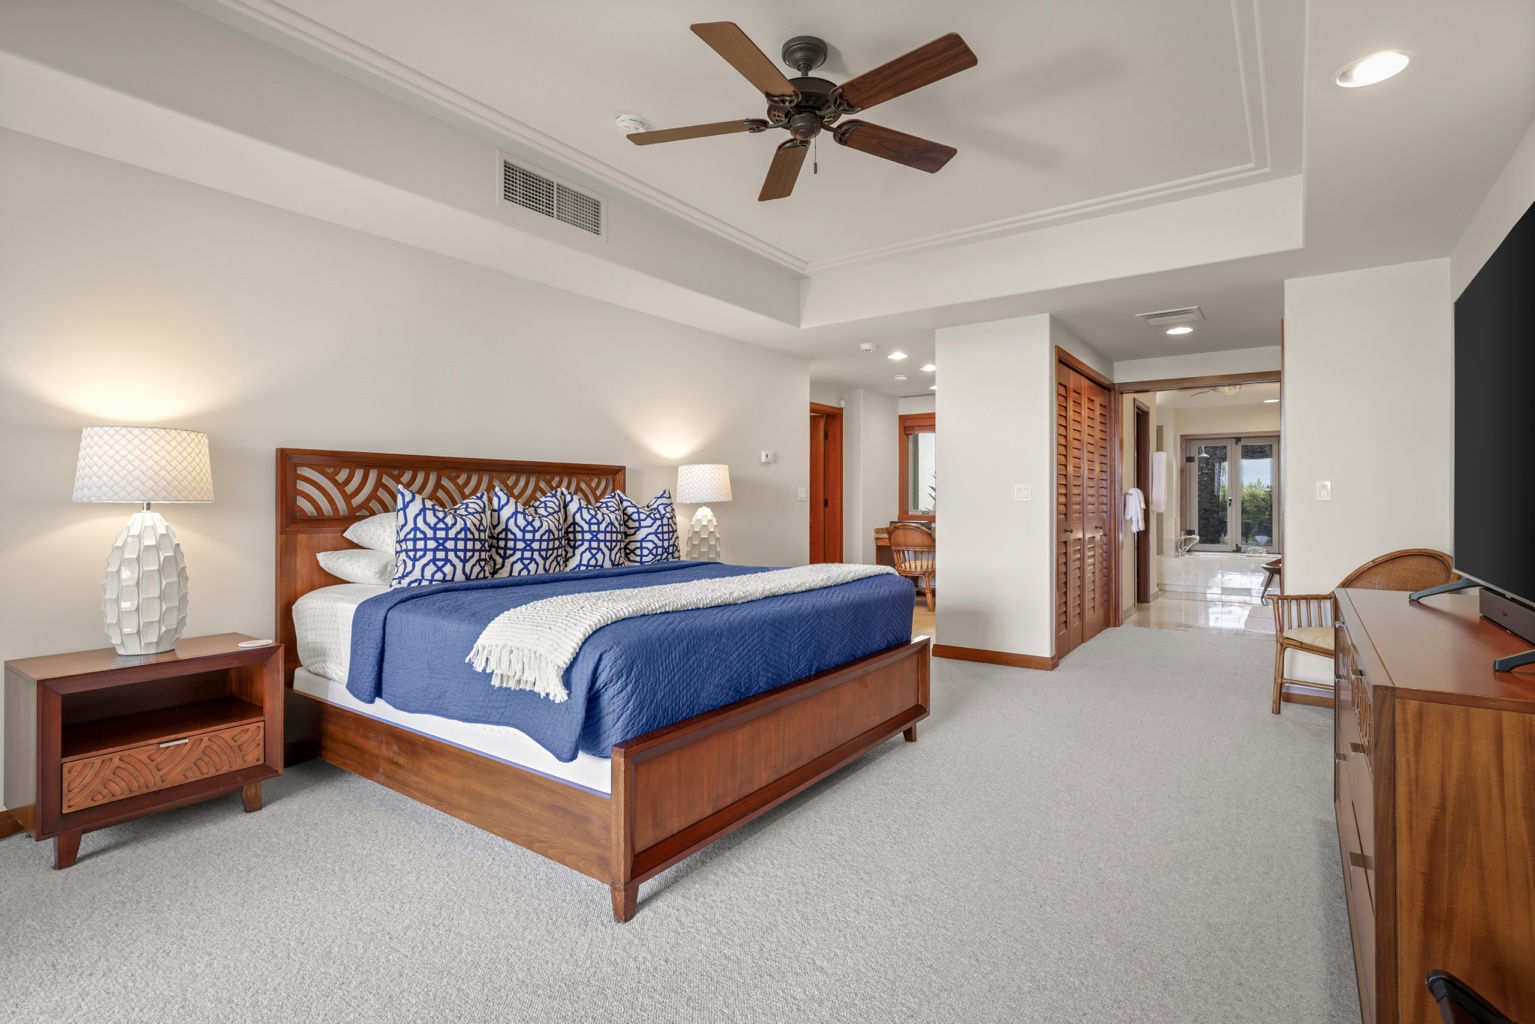 Kailua Kona Vacation Rentals, 3BD Golf Villa (3101) at Four Seasons Resort at Hualalai - Primary bedroom w/king bed, flat screen TV, sliding doors to private ocean view lanai & ensuite bath.